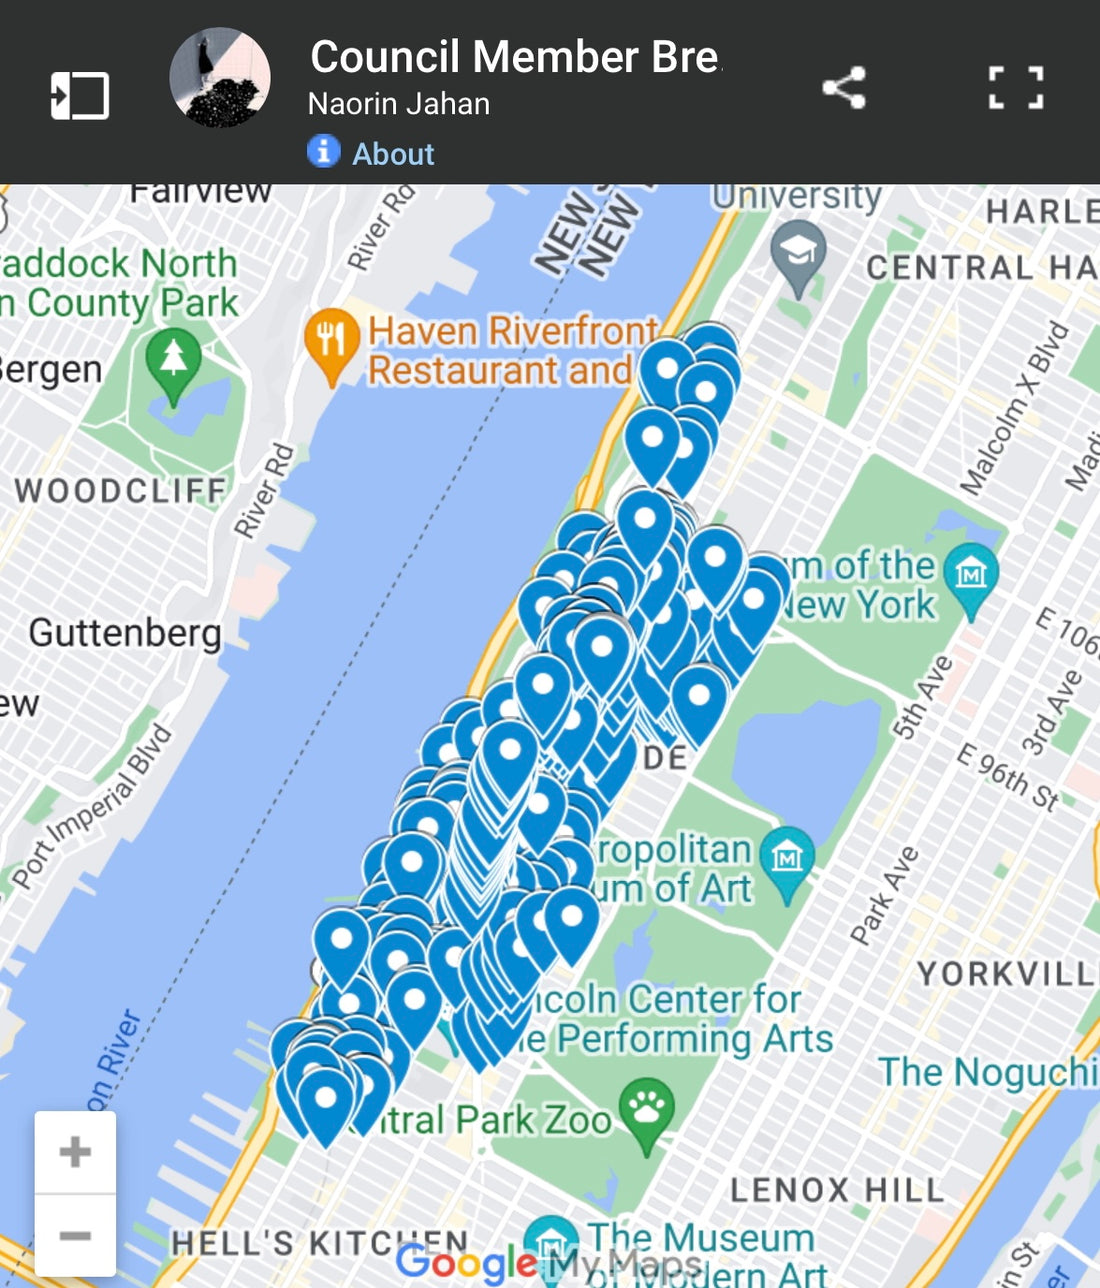 NYC Councilmember's Interactive Graffiti Map